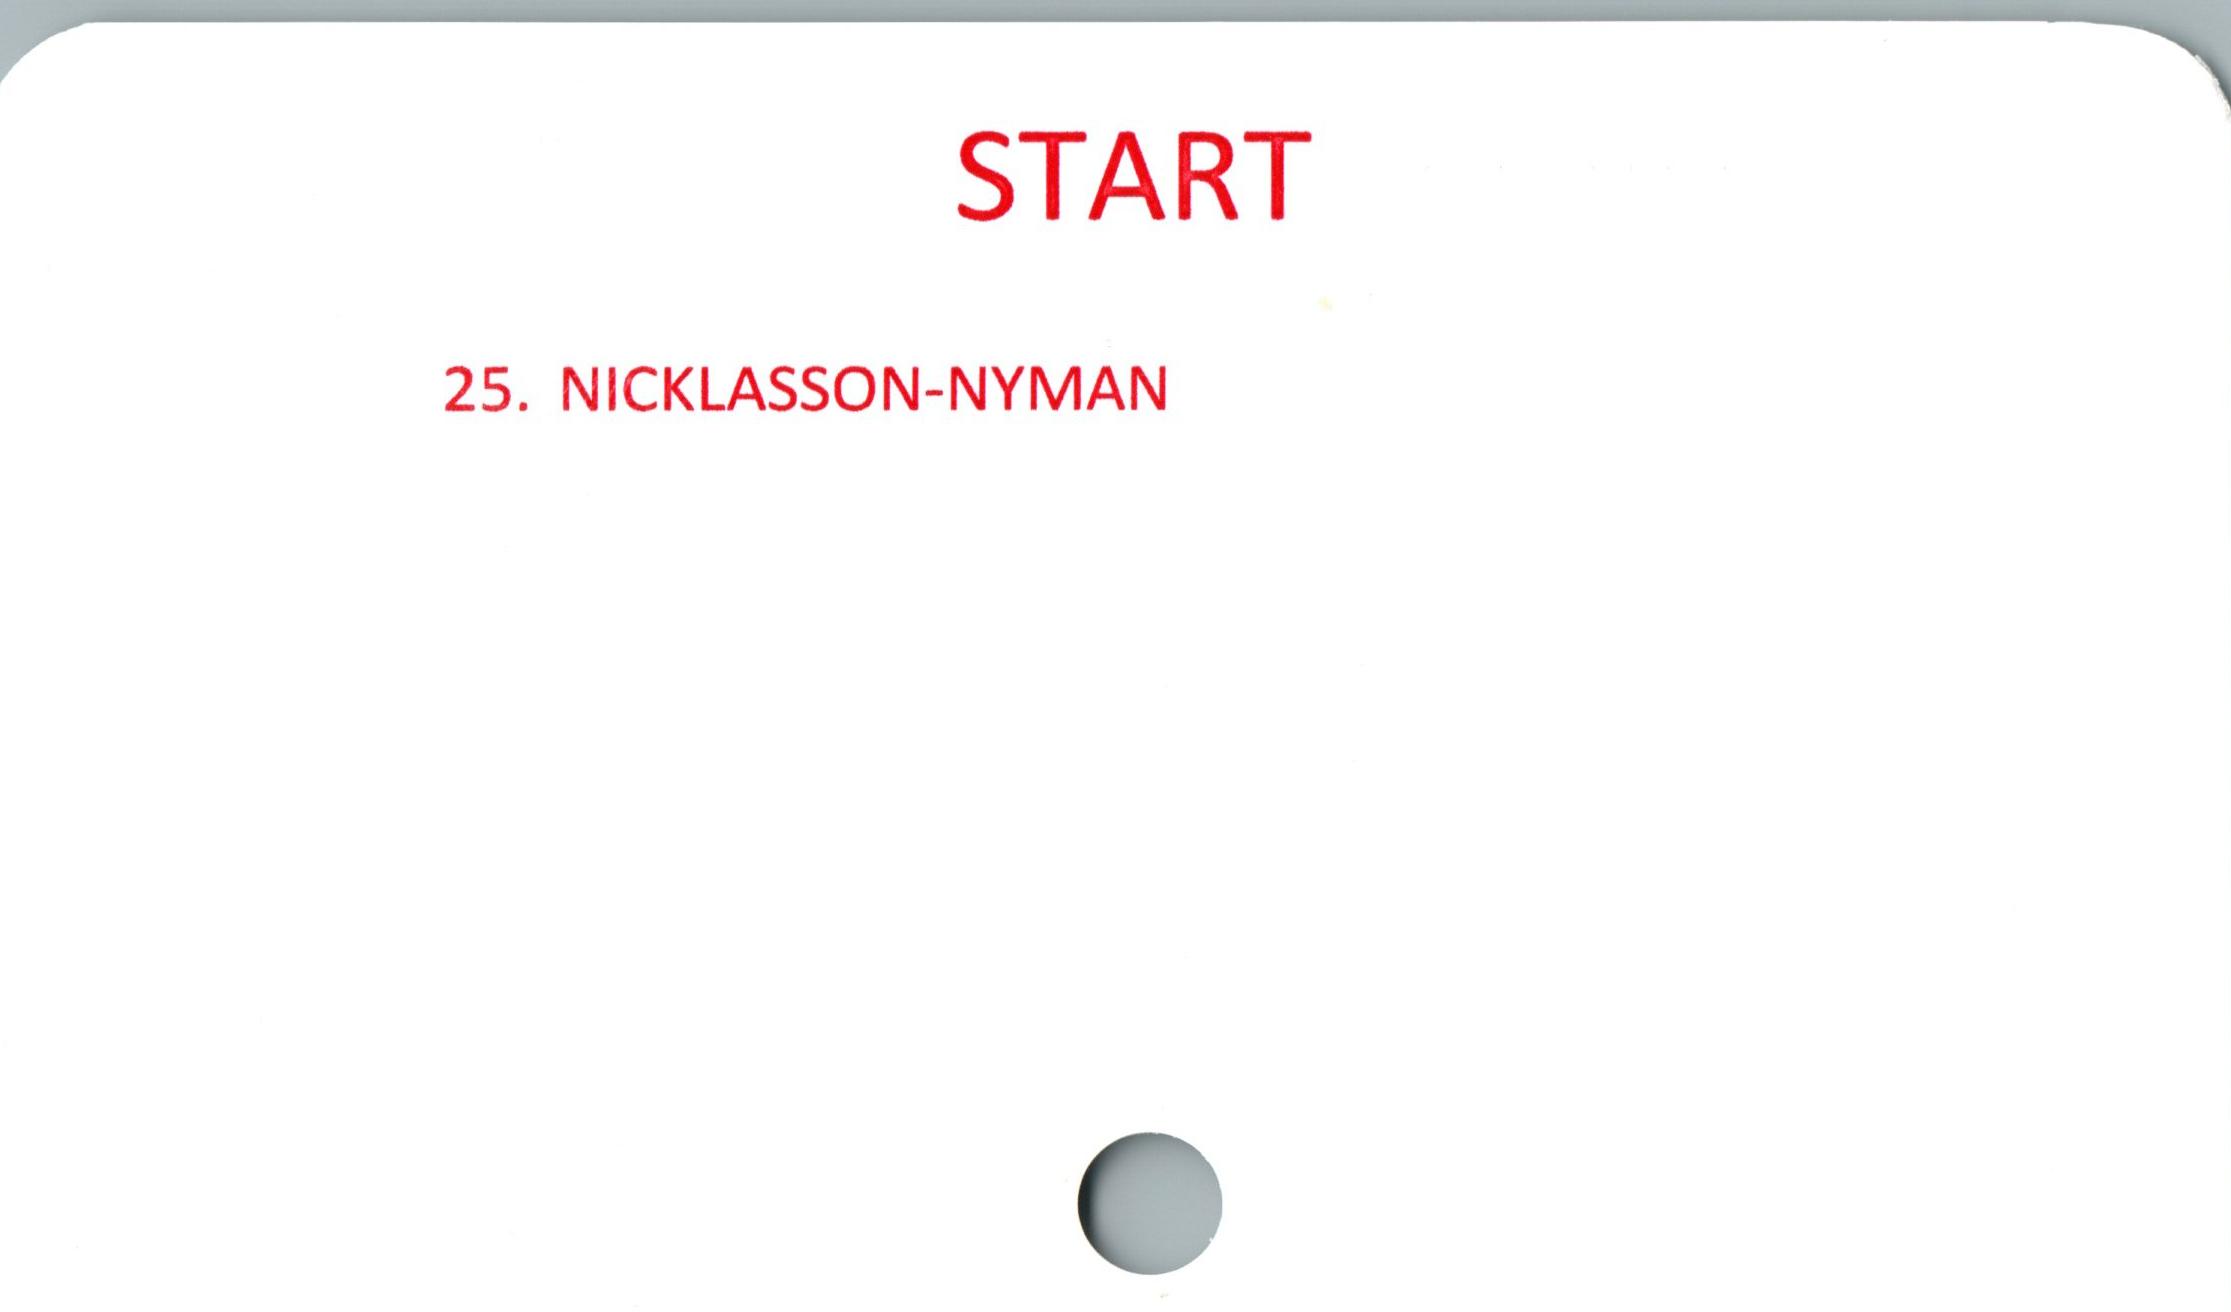  ﻿START

25. NICKLASSON-NYMAN